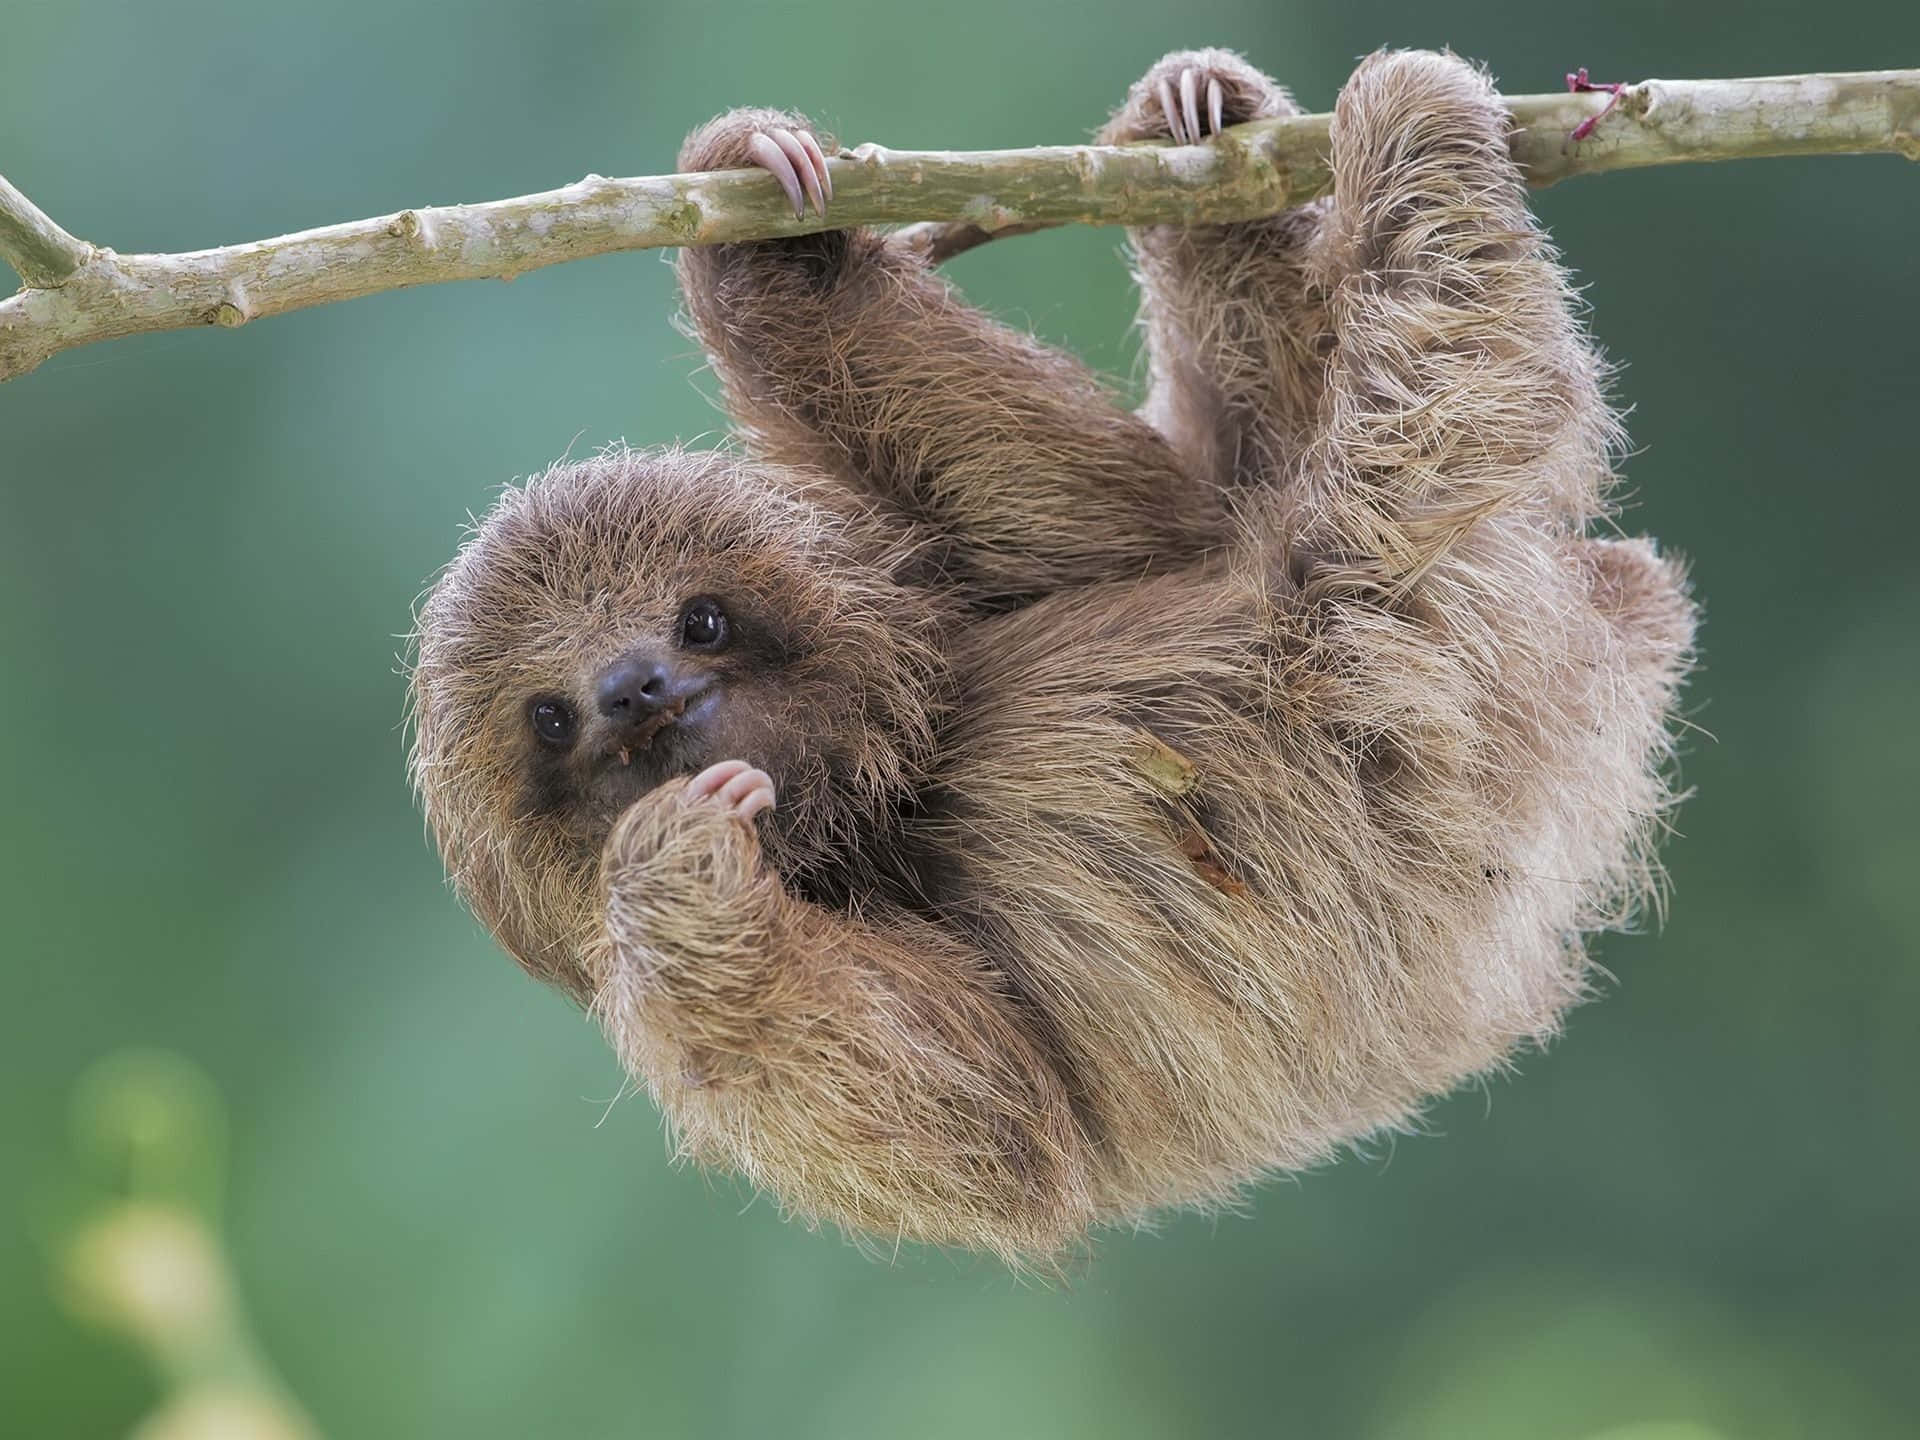 Adorable Baby Sloth Enjoys the Comfort of Home